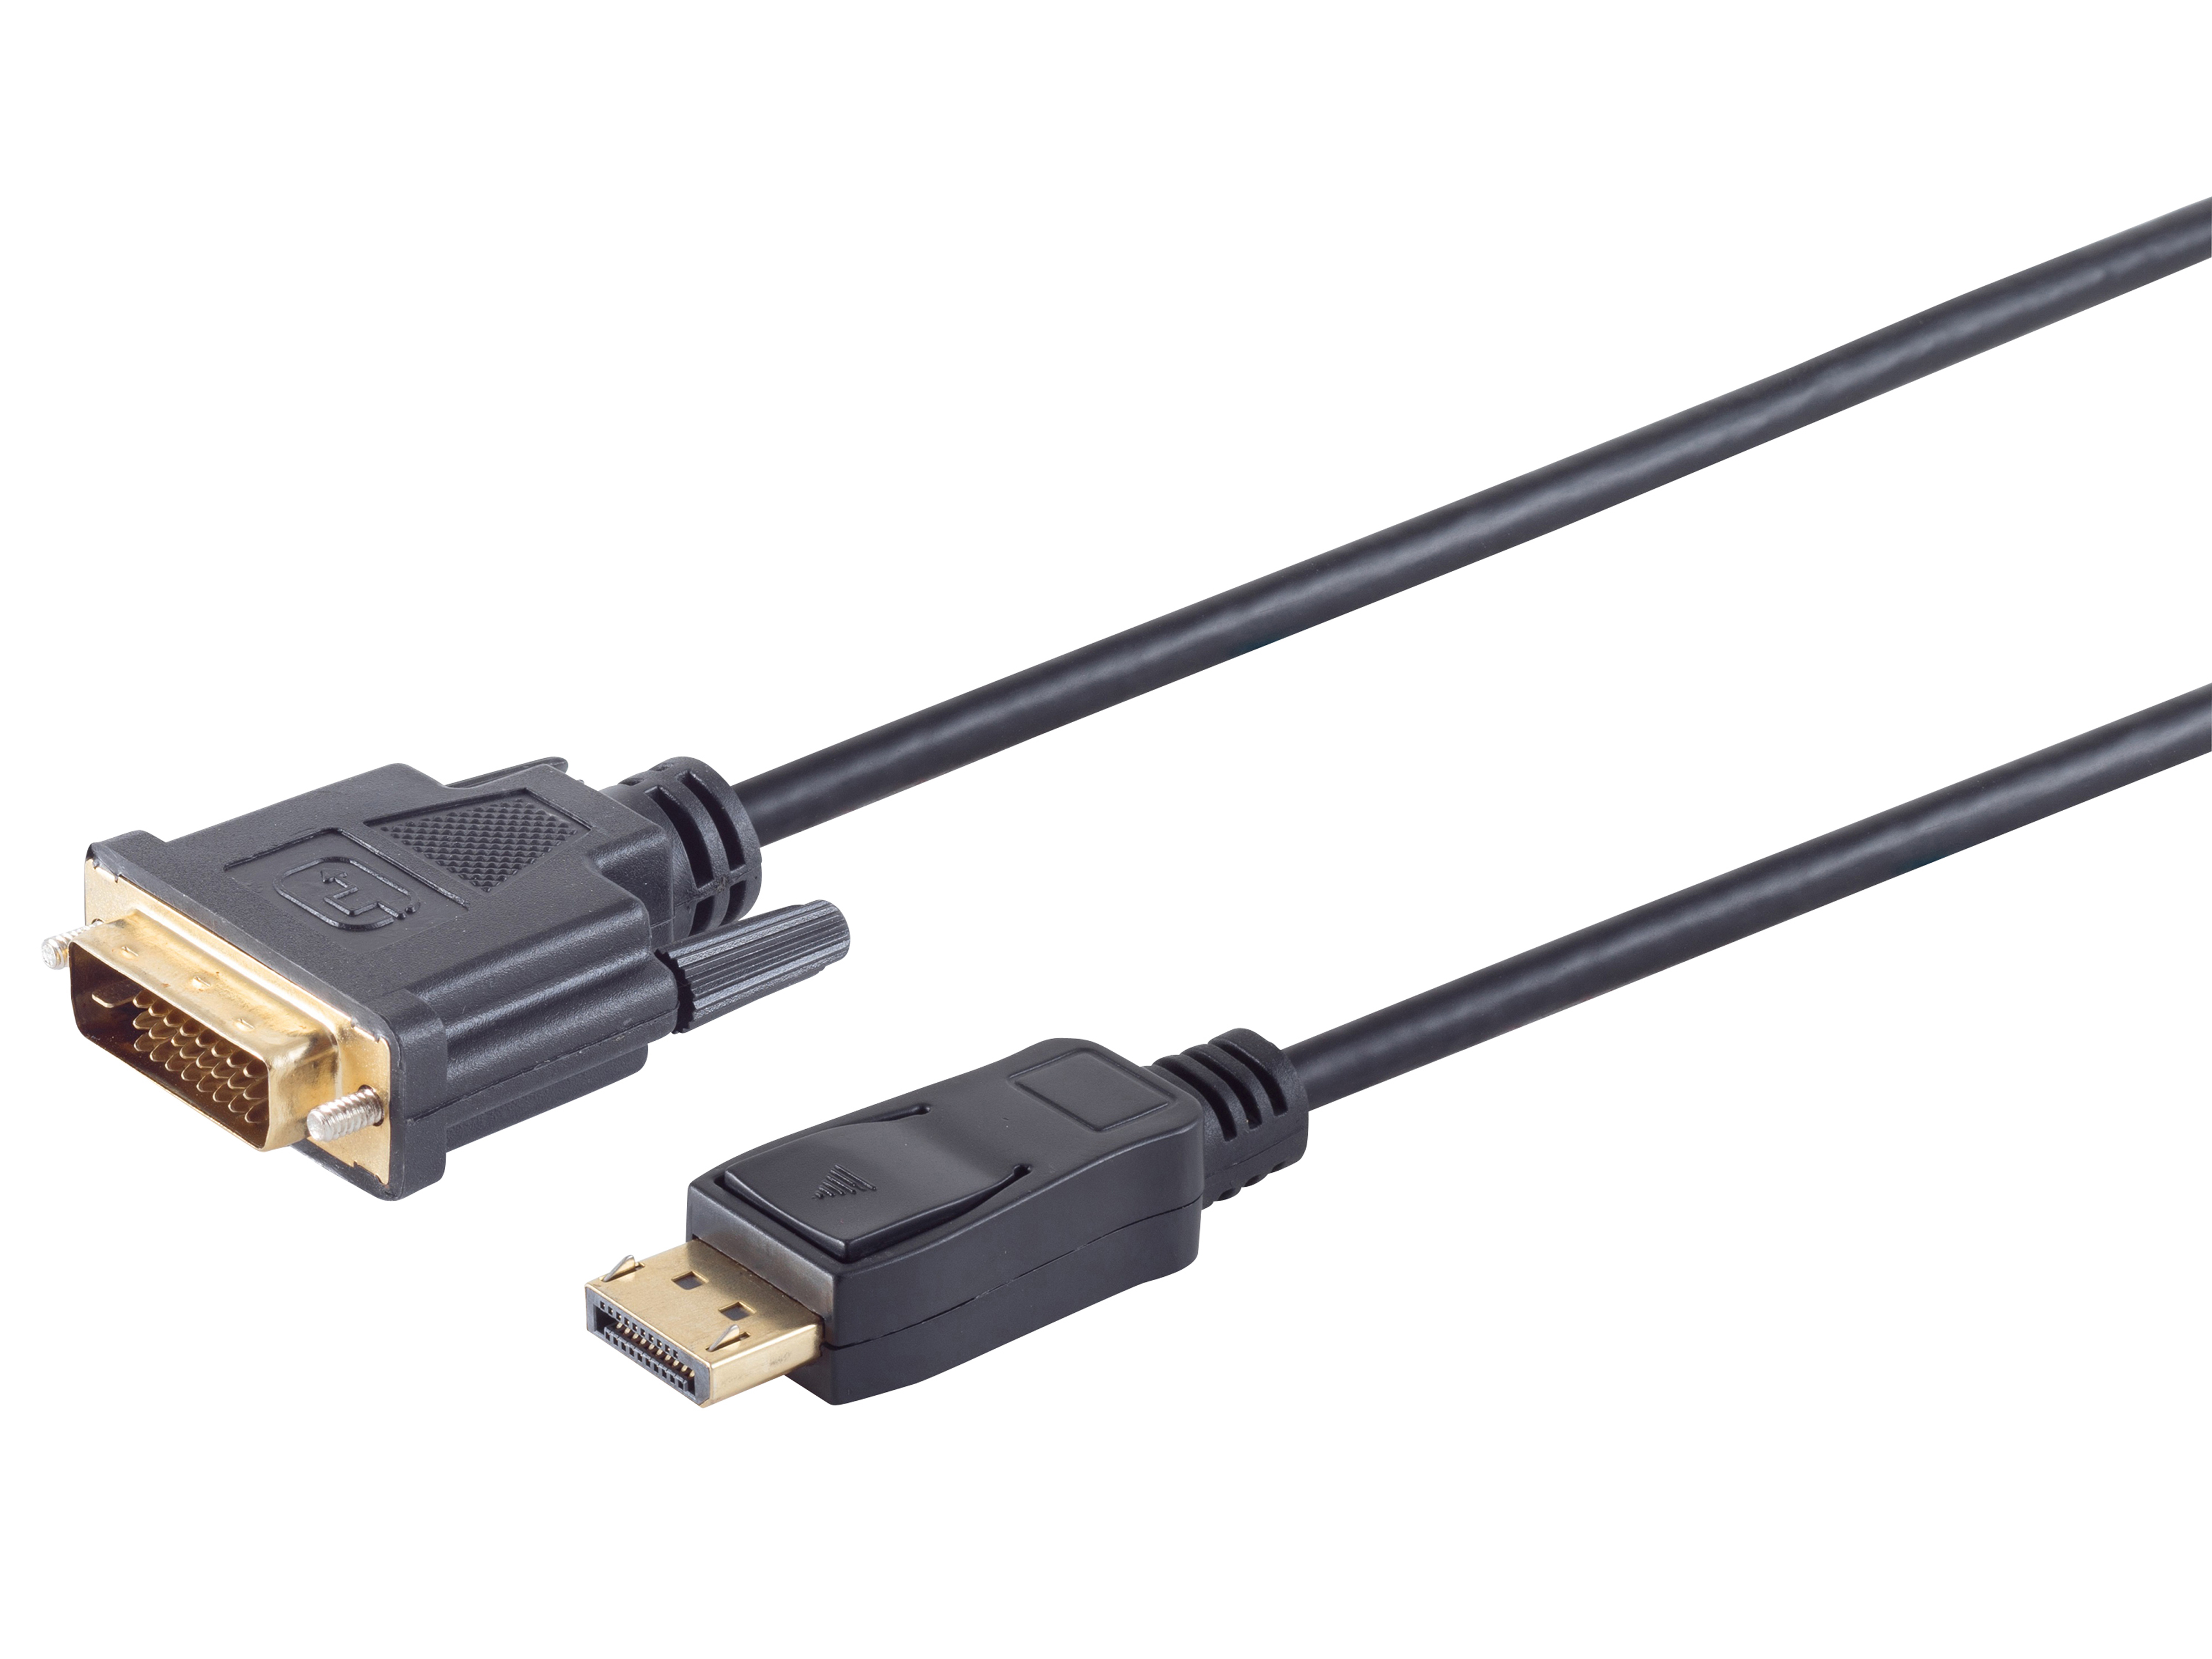 S-IMPULS DisplayPort 1.2 Adapterkabel DVI-D 1080p 3m